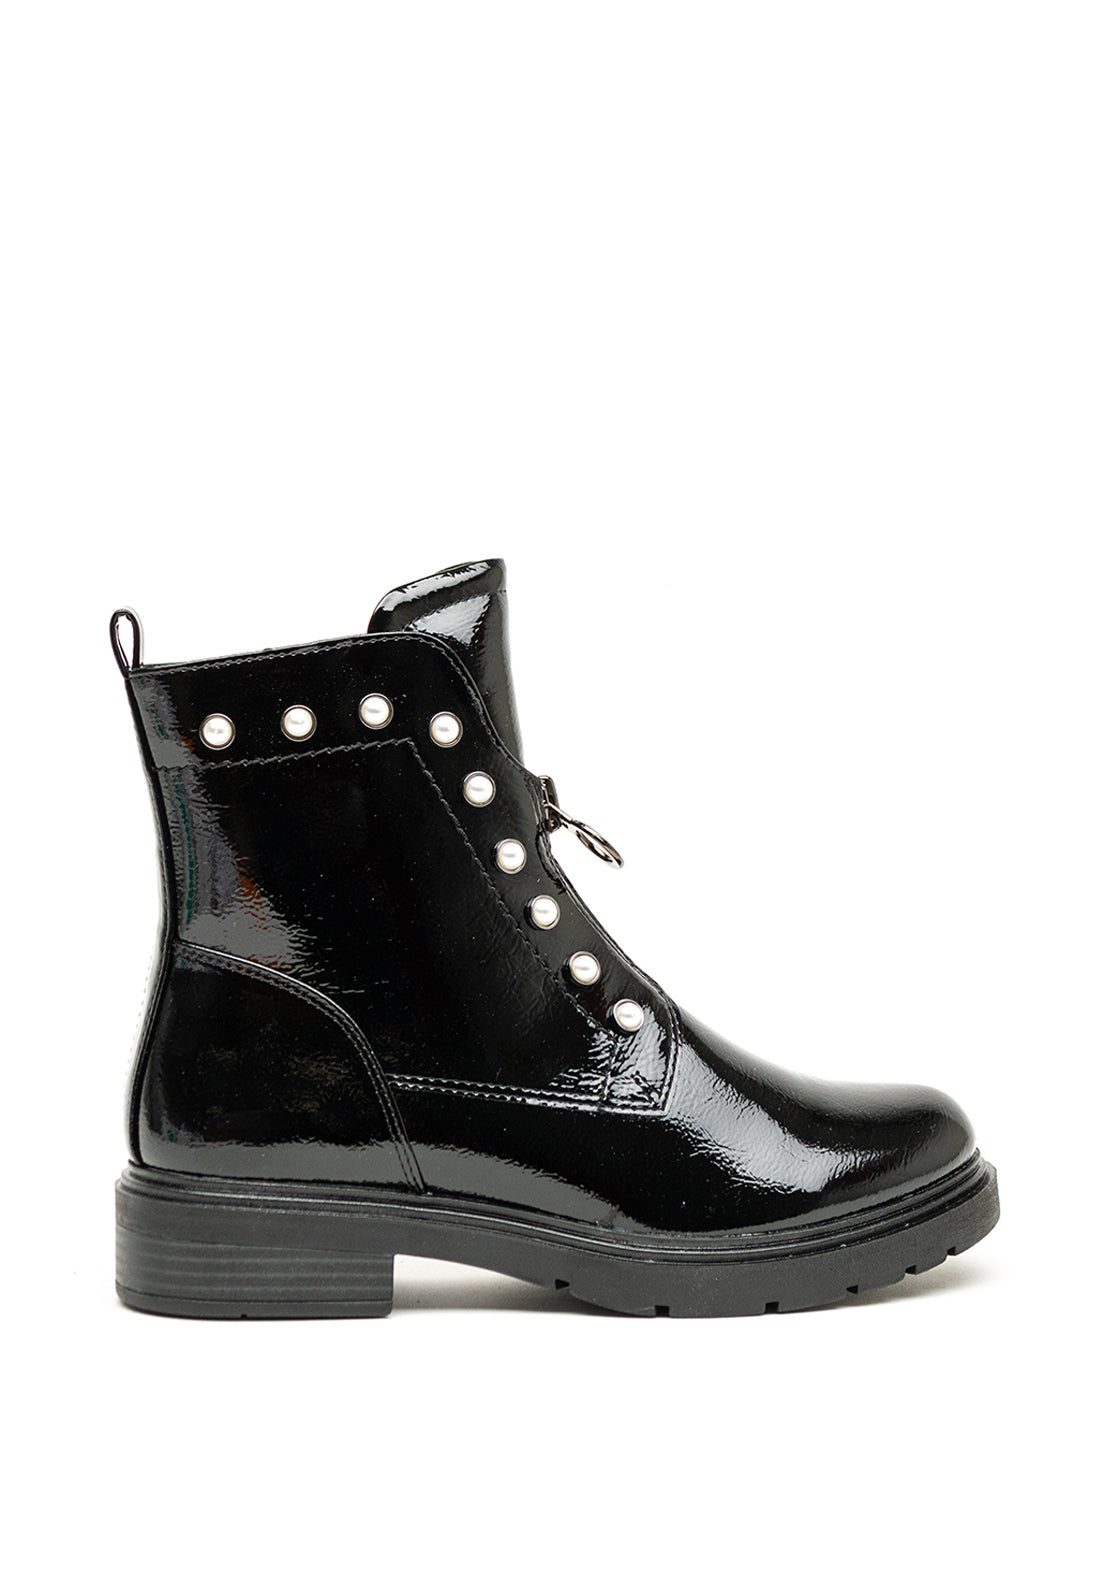 Marco Tozzi Zip Boots, Black - McElhinneys